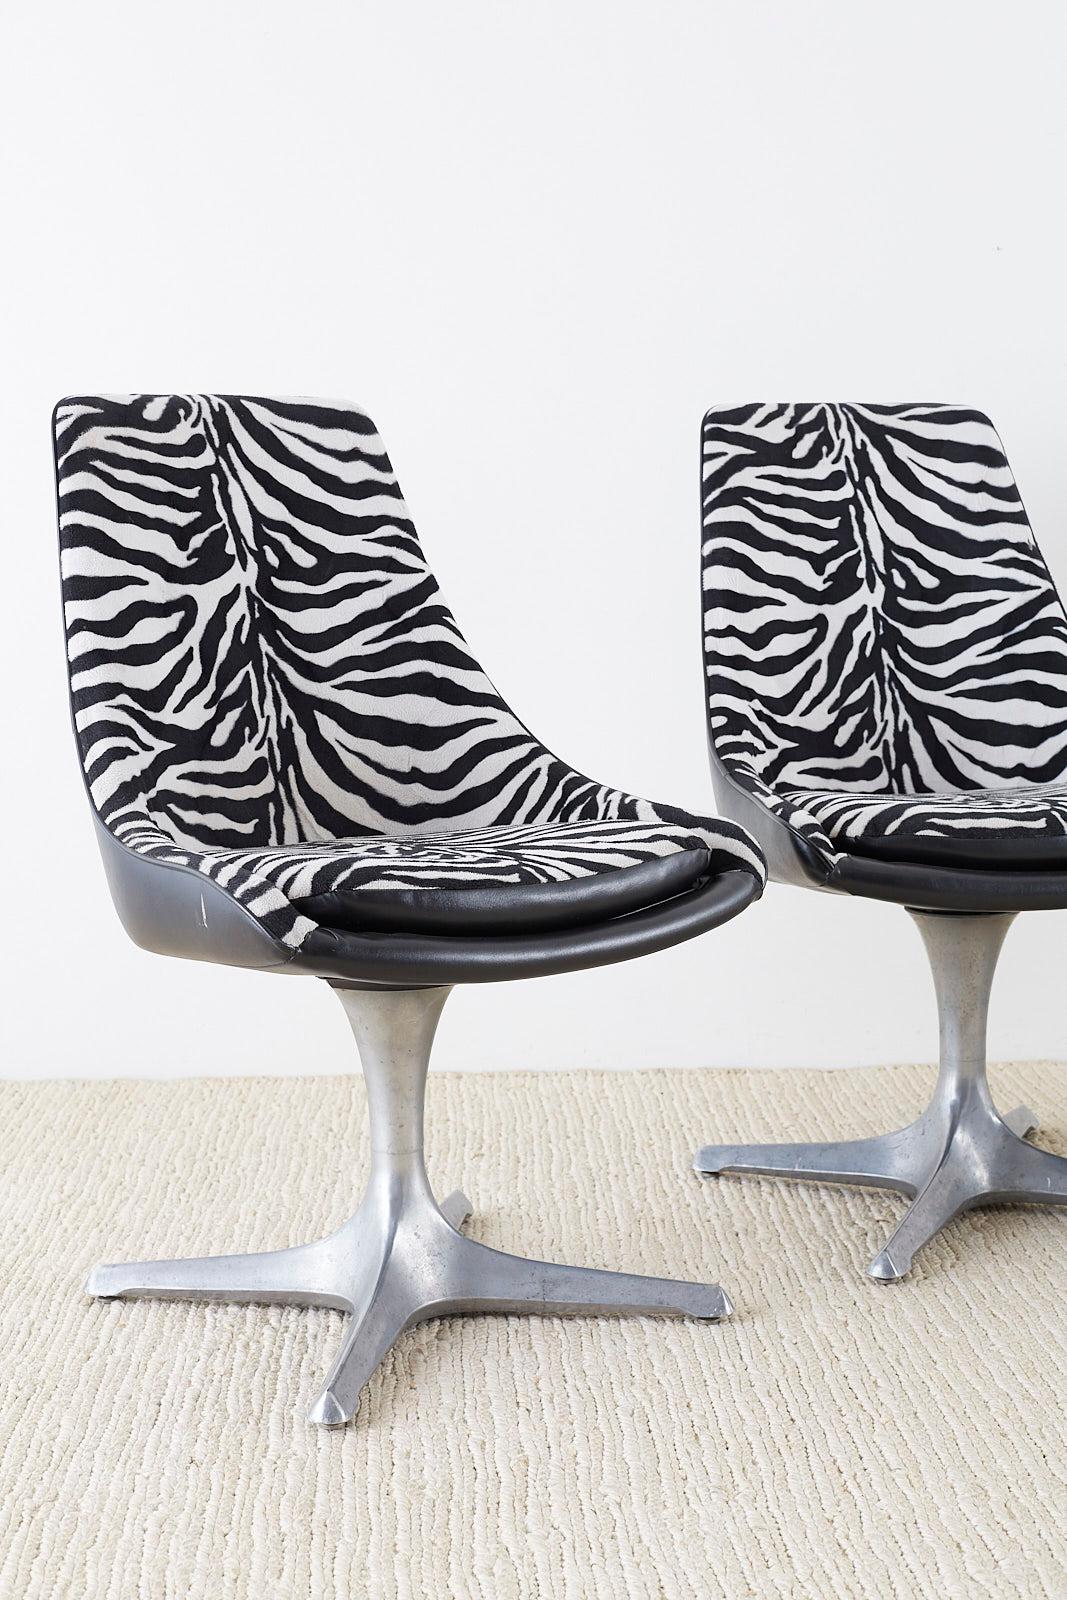 zebra dining chairs